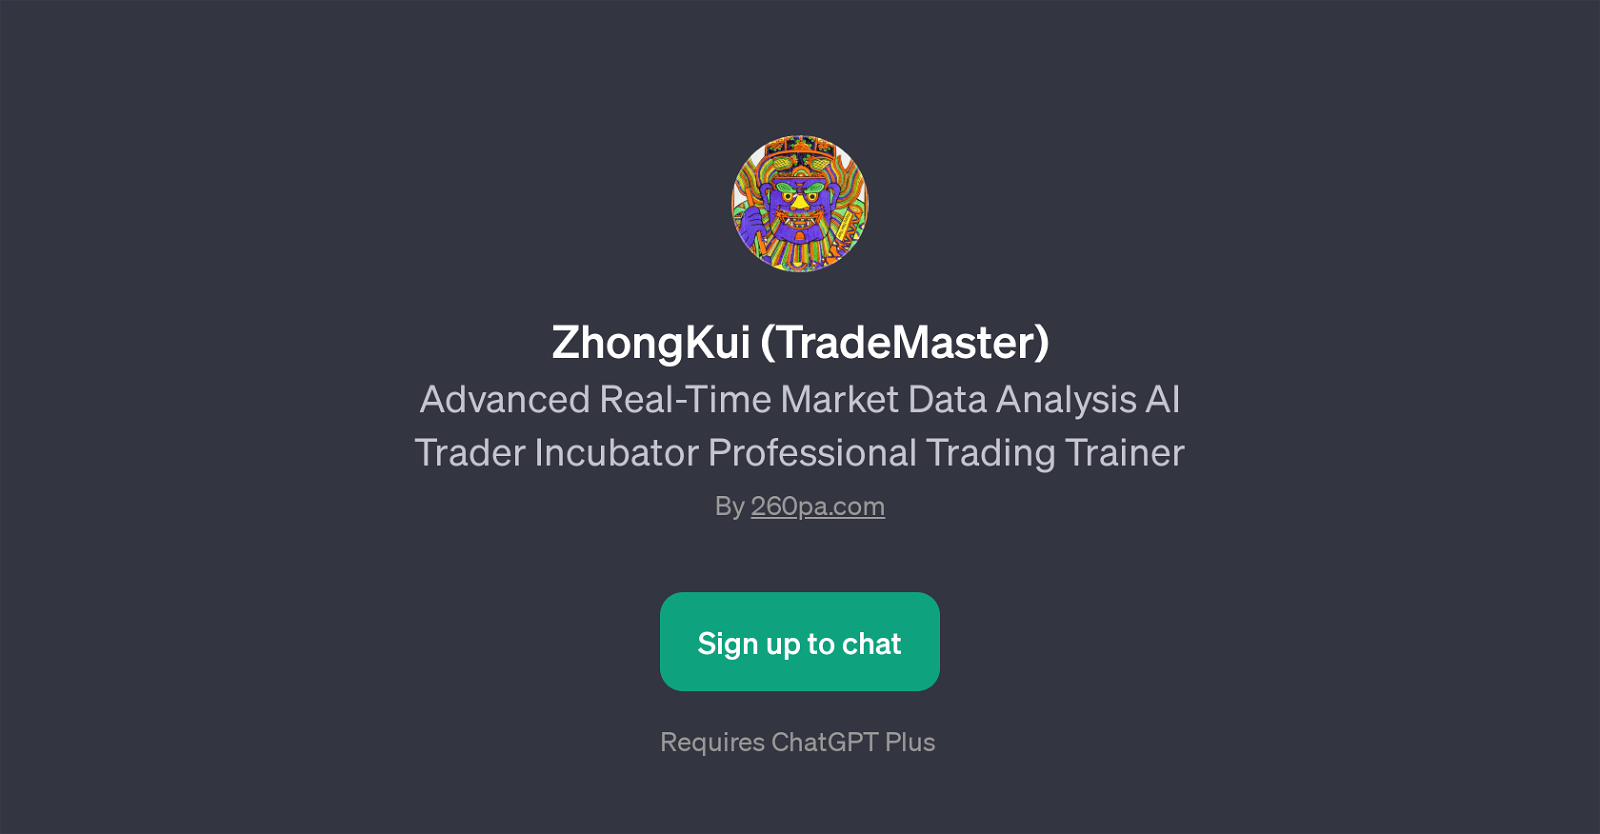 ZhongKui (TradeMaster) website